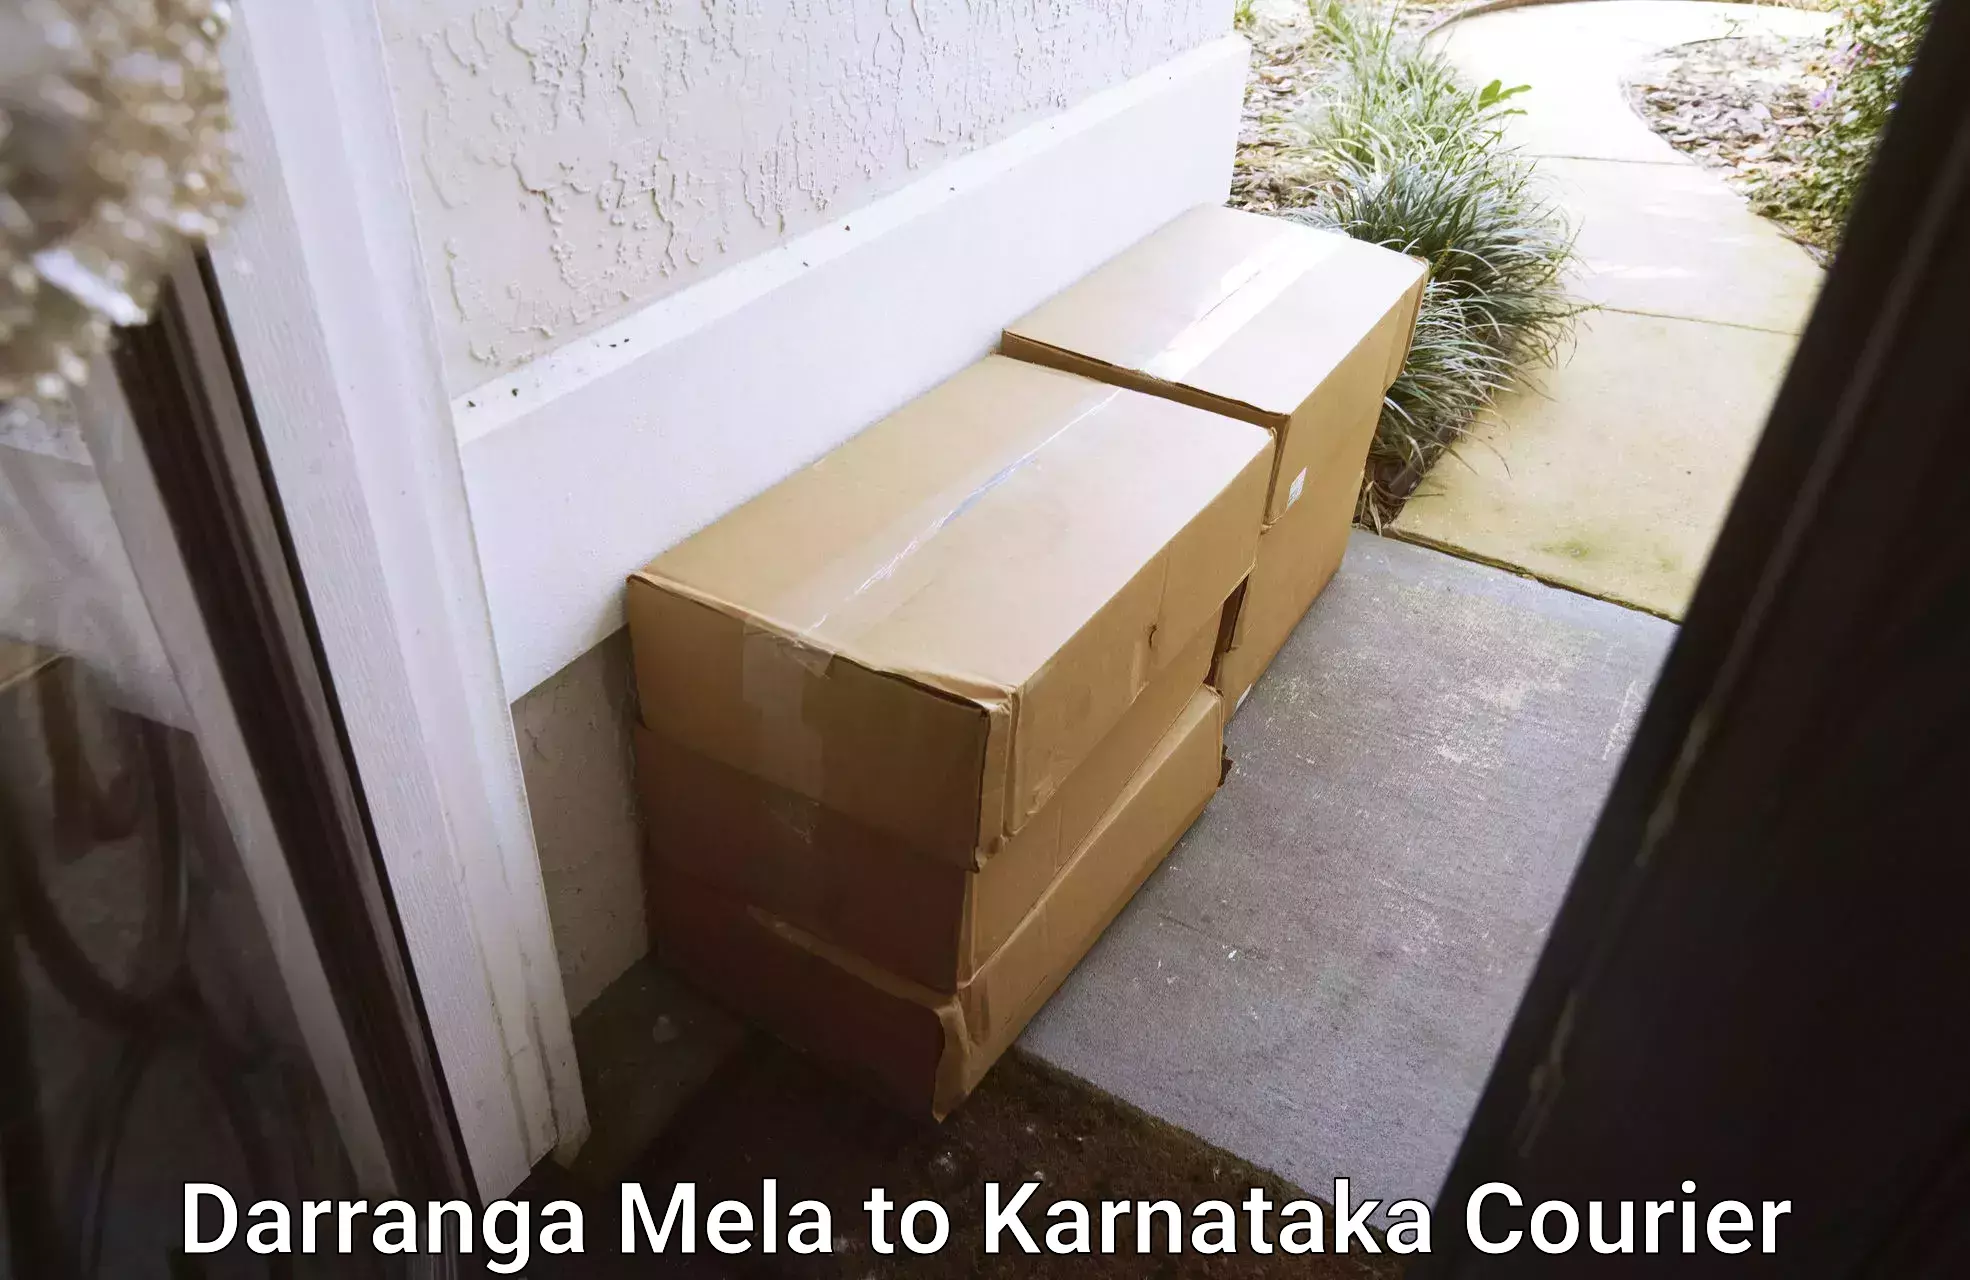 Advanced delivery solutions Darranga Mela to Karnataka